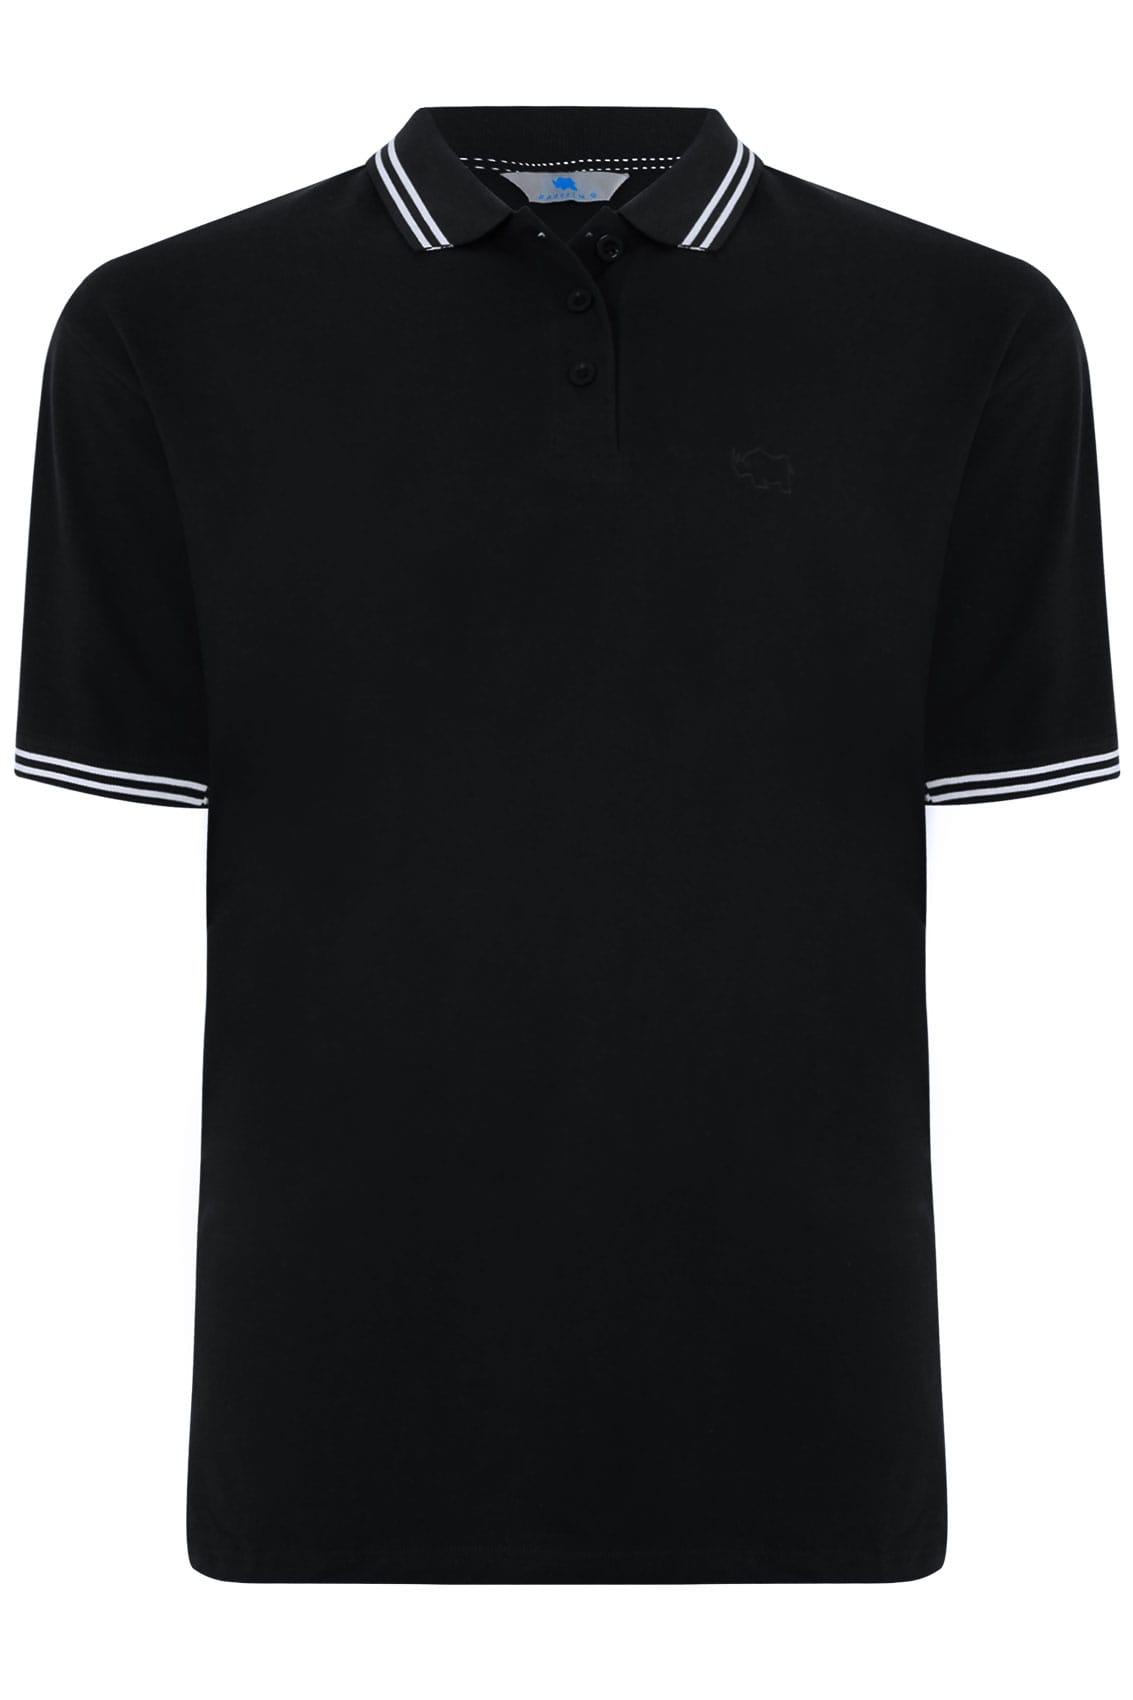 2 PACK BadRhino Black & White Polo Shirt With White Stripe Detail